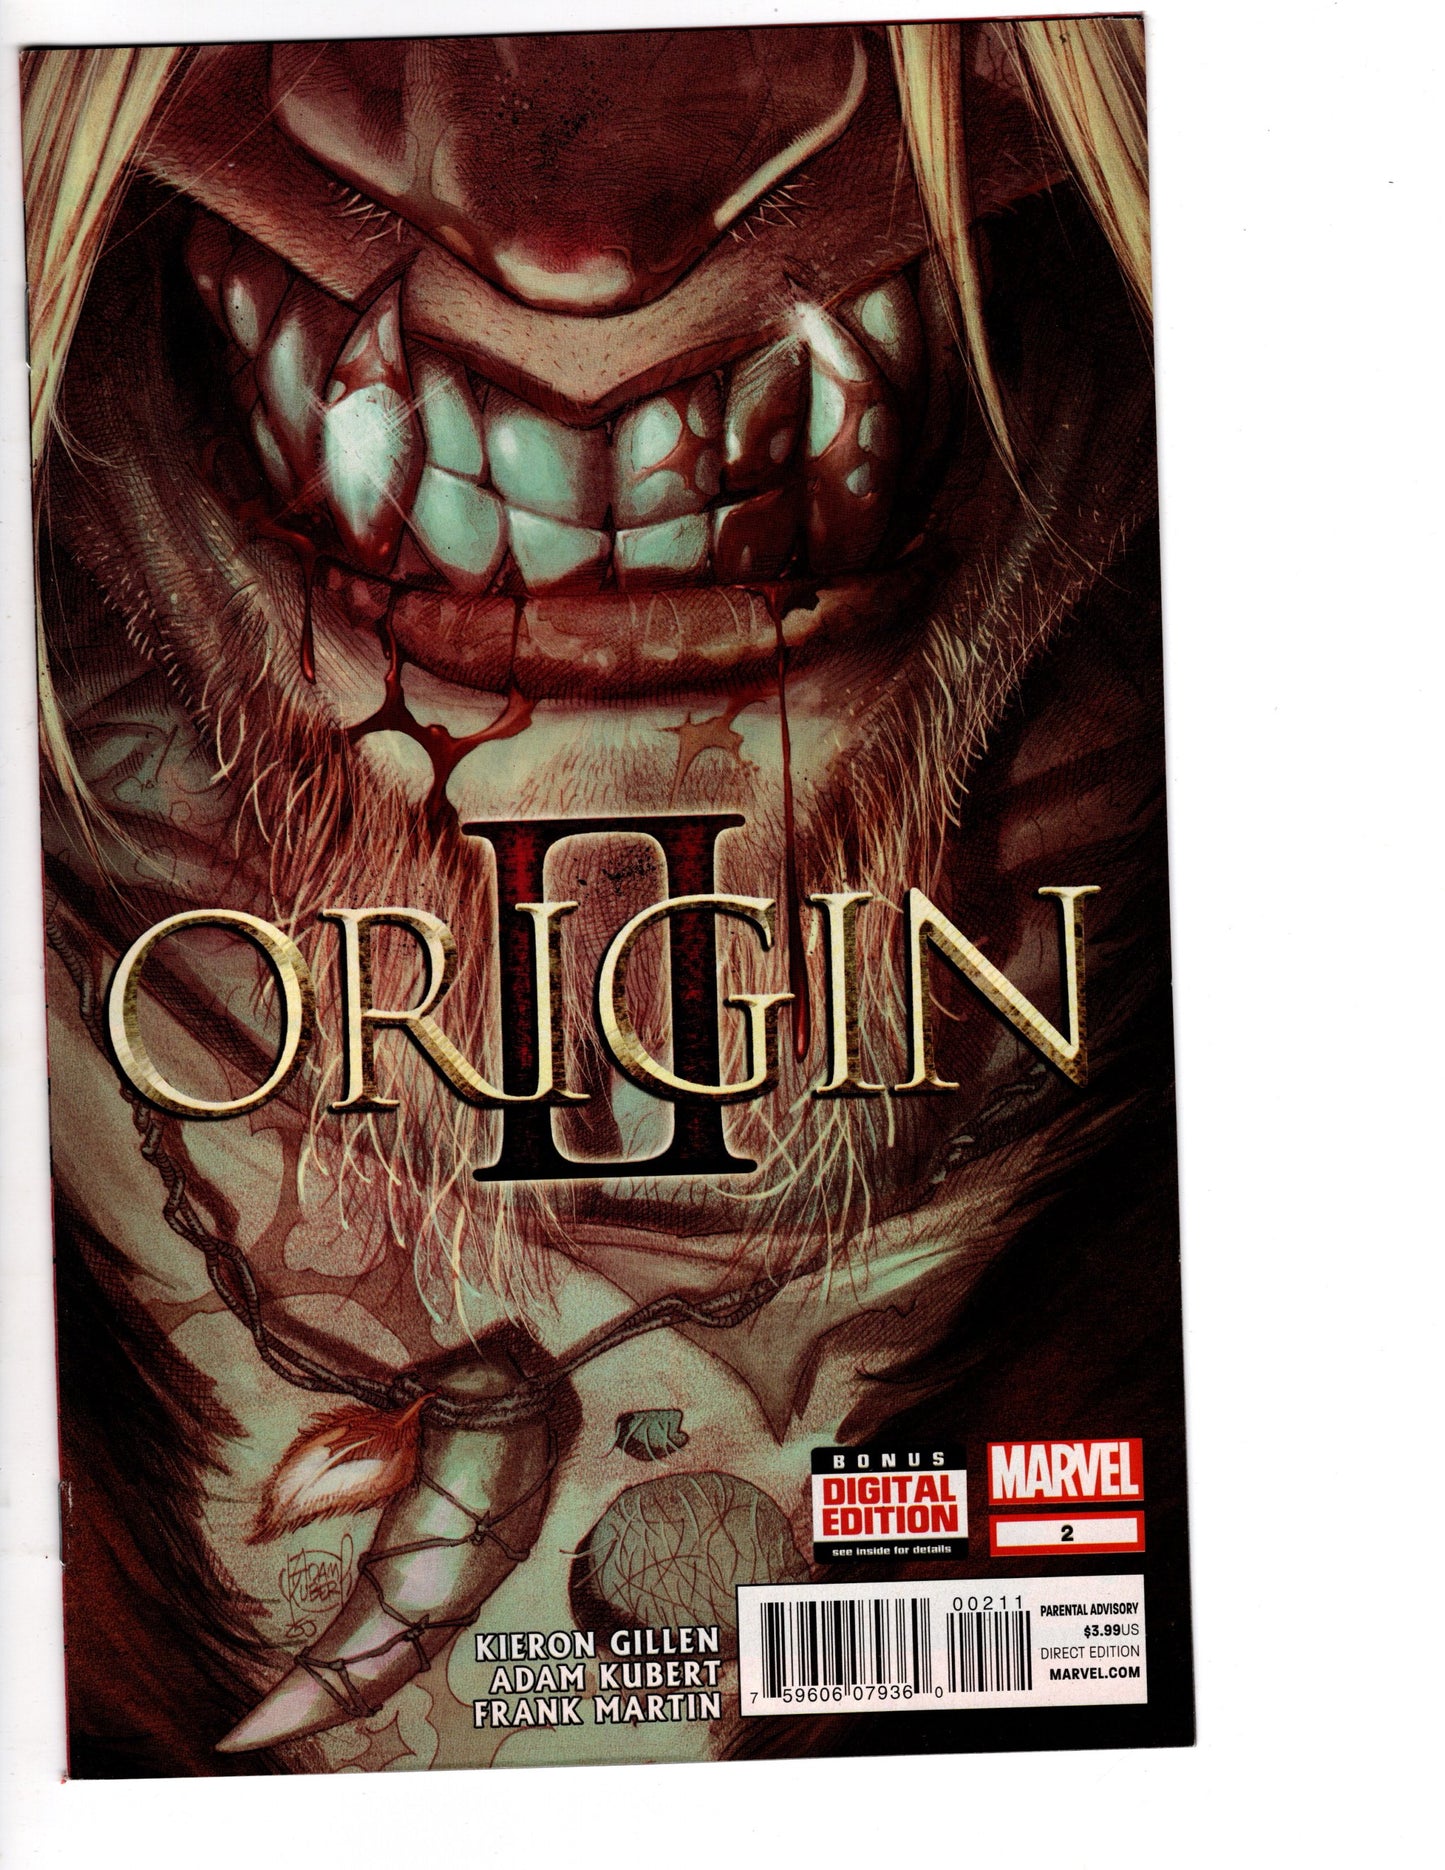 Origin II #2